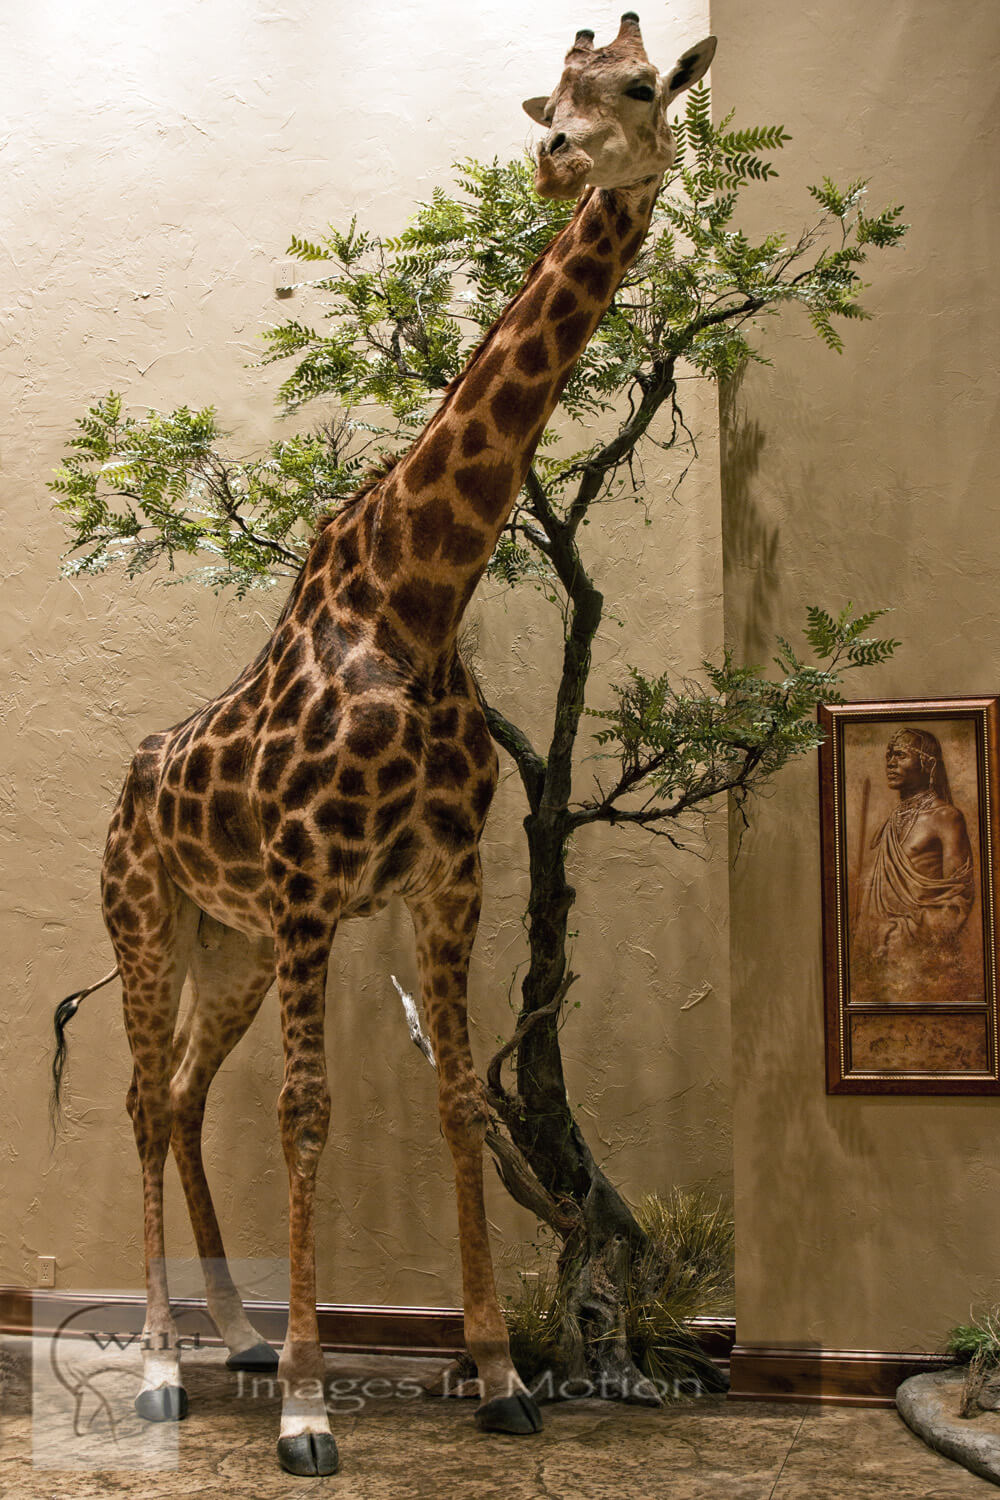 Giraffe and artificial tree